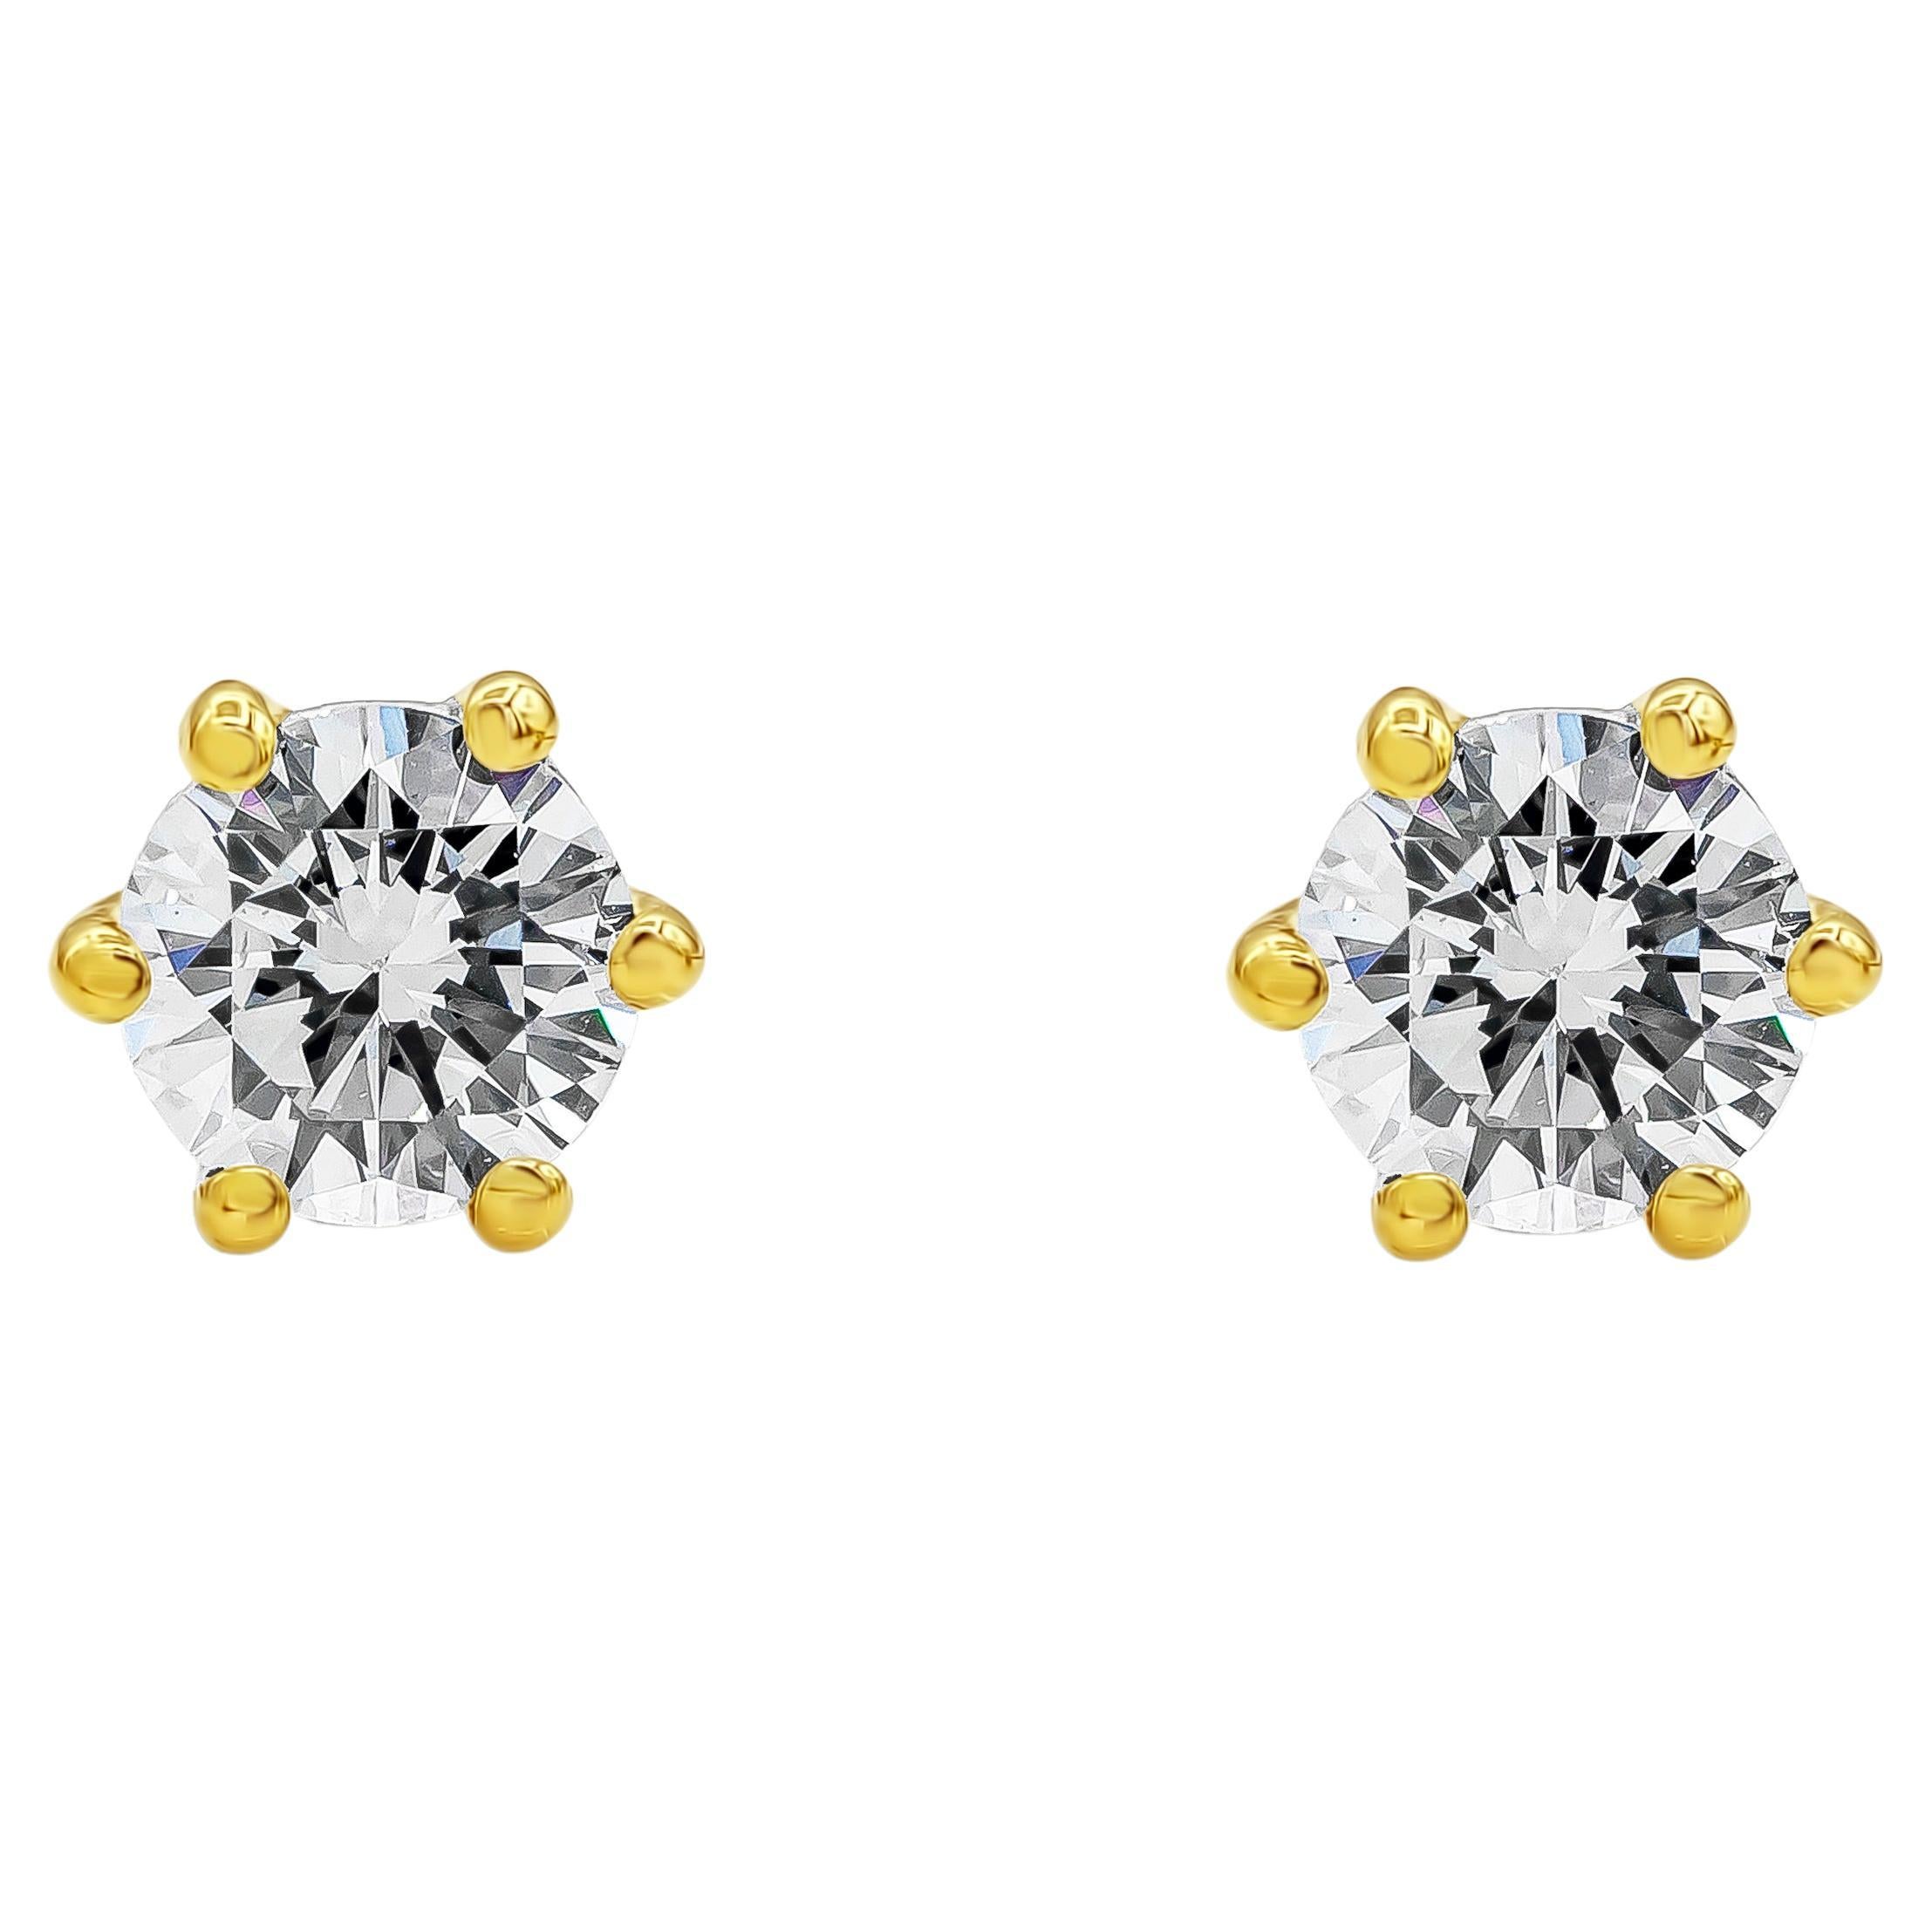 Roman Malakov 0.39 Carat Round Diamond Stud Earrings in Yellow Gold For Sale